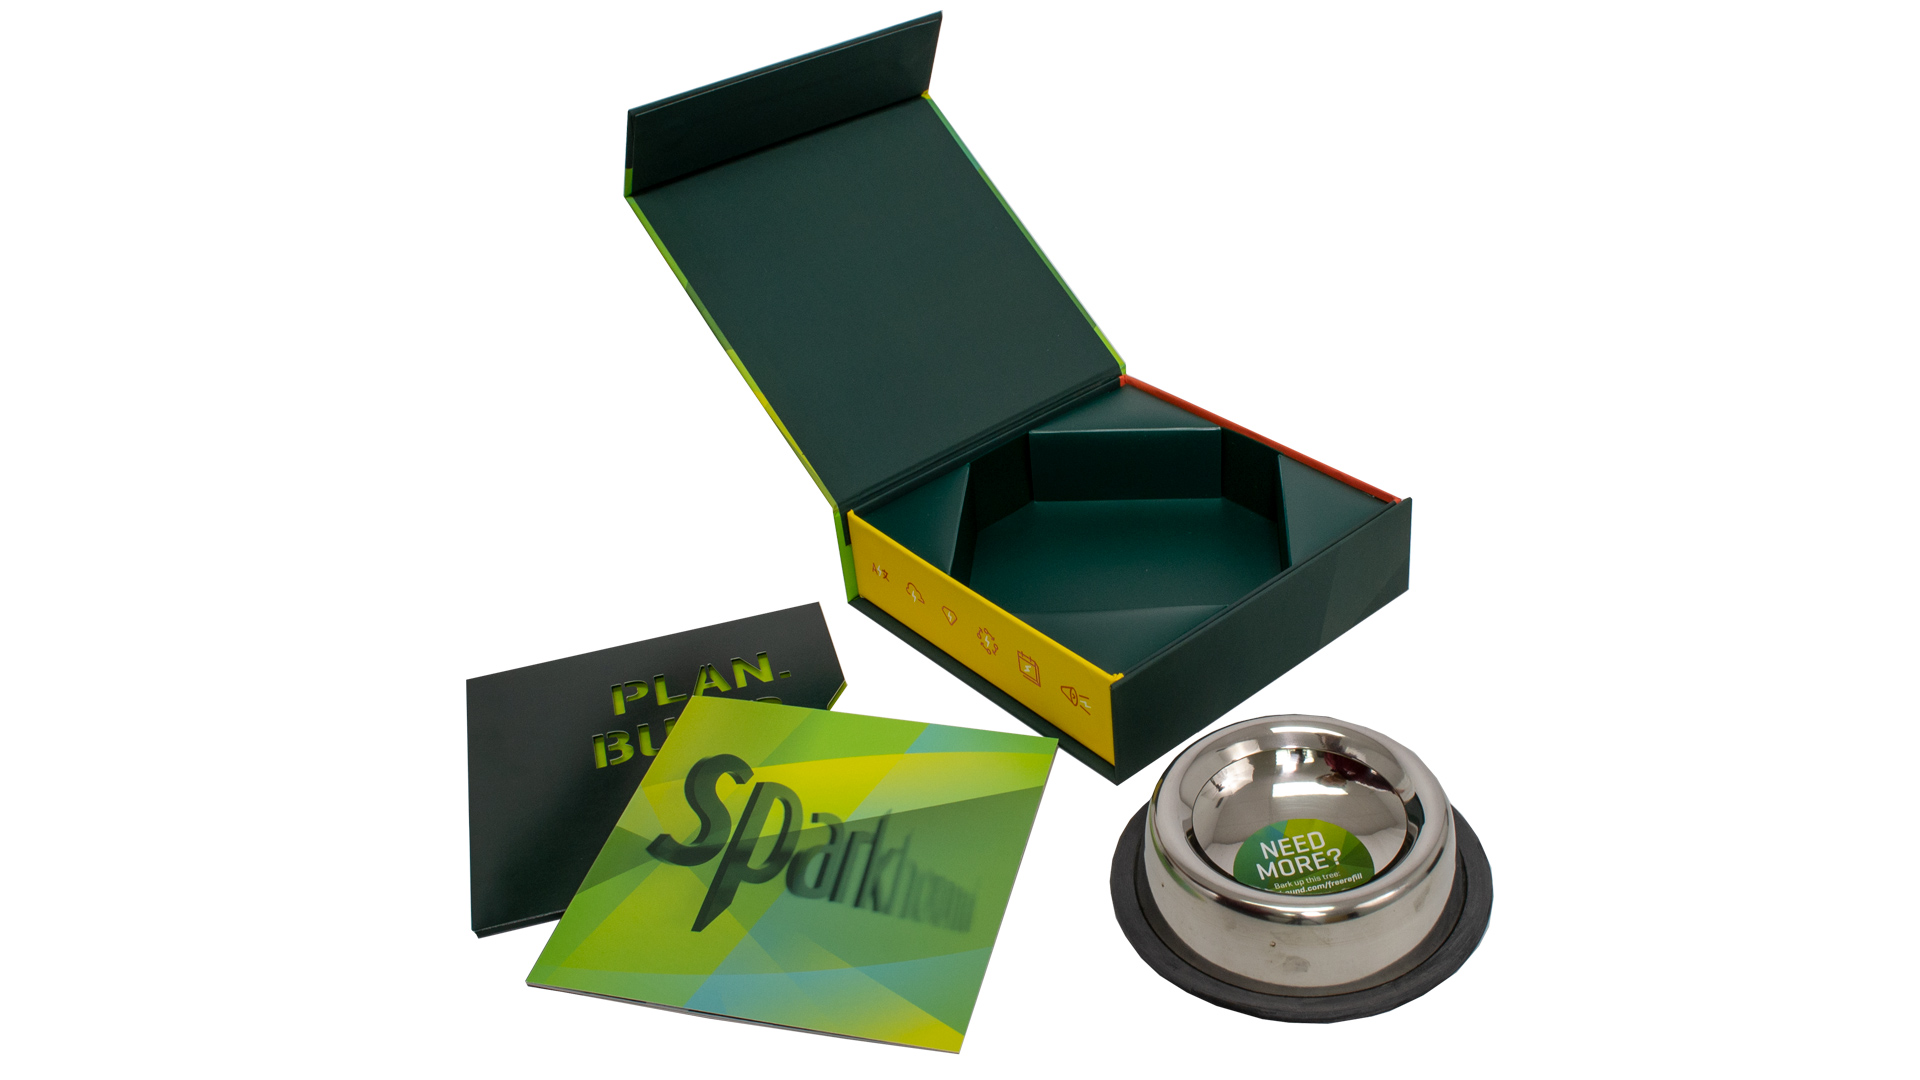 Sparkhound Sales Kit Packaging